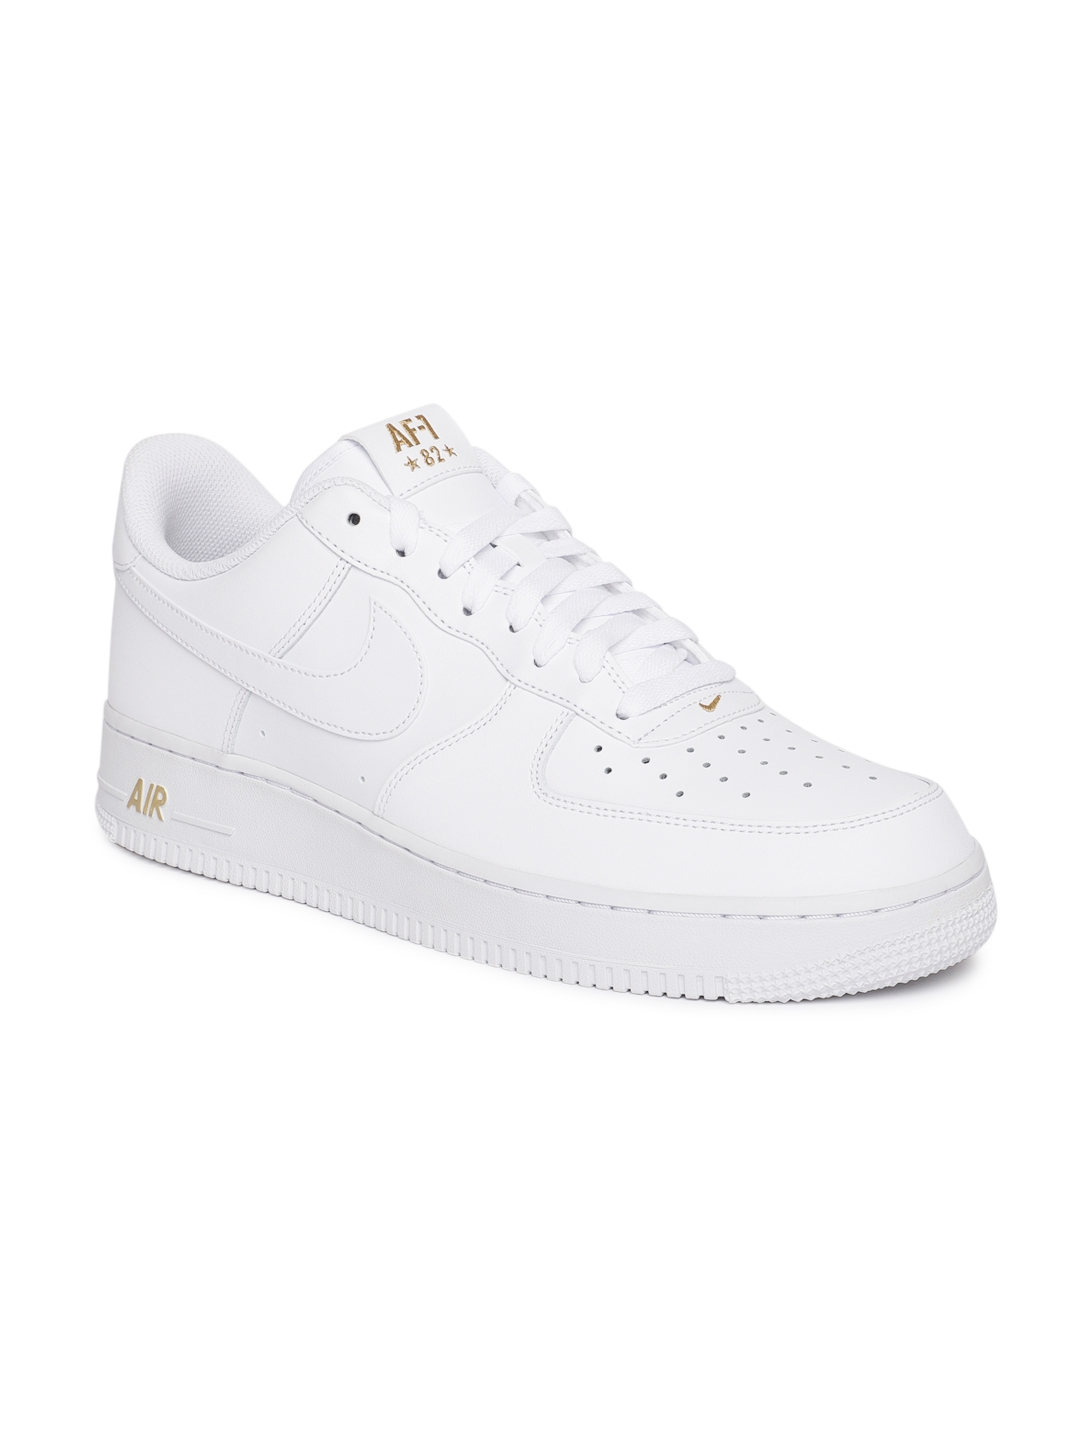 Buy Nike Men White Air Force Sneakers 